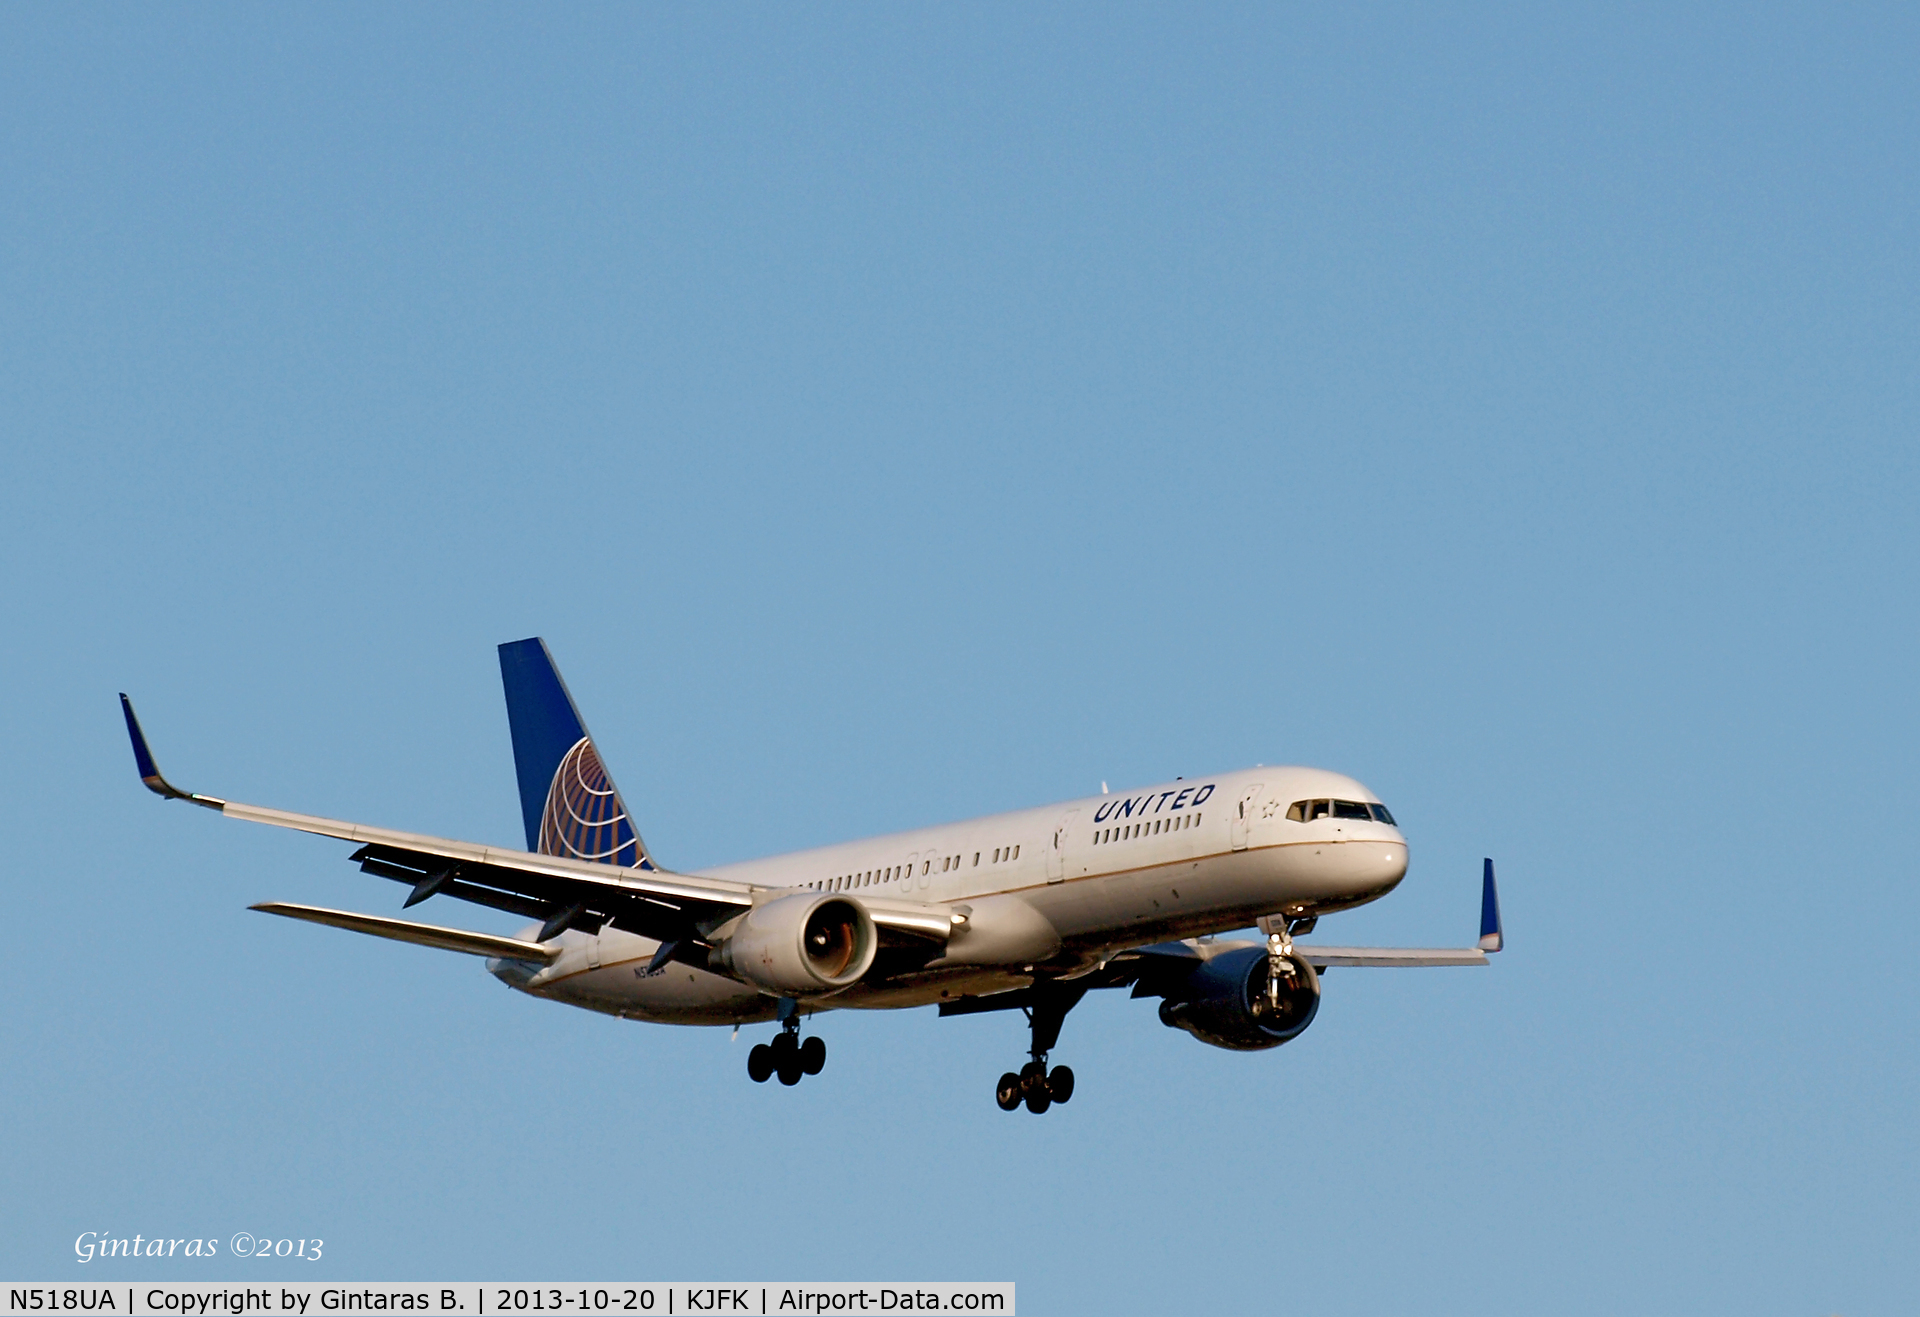 N518UA, 1990 Boeing 757-222 C/N 24871, Going to a landing on 22L @JFK